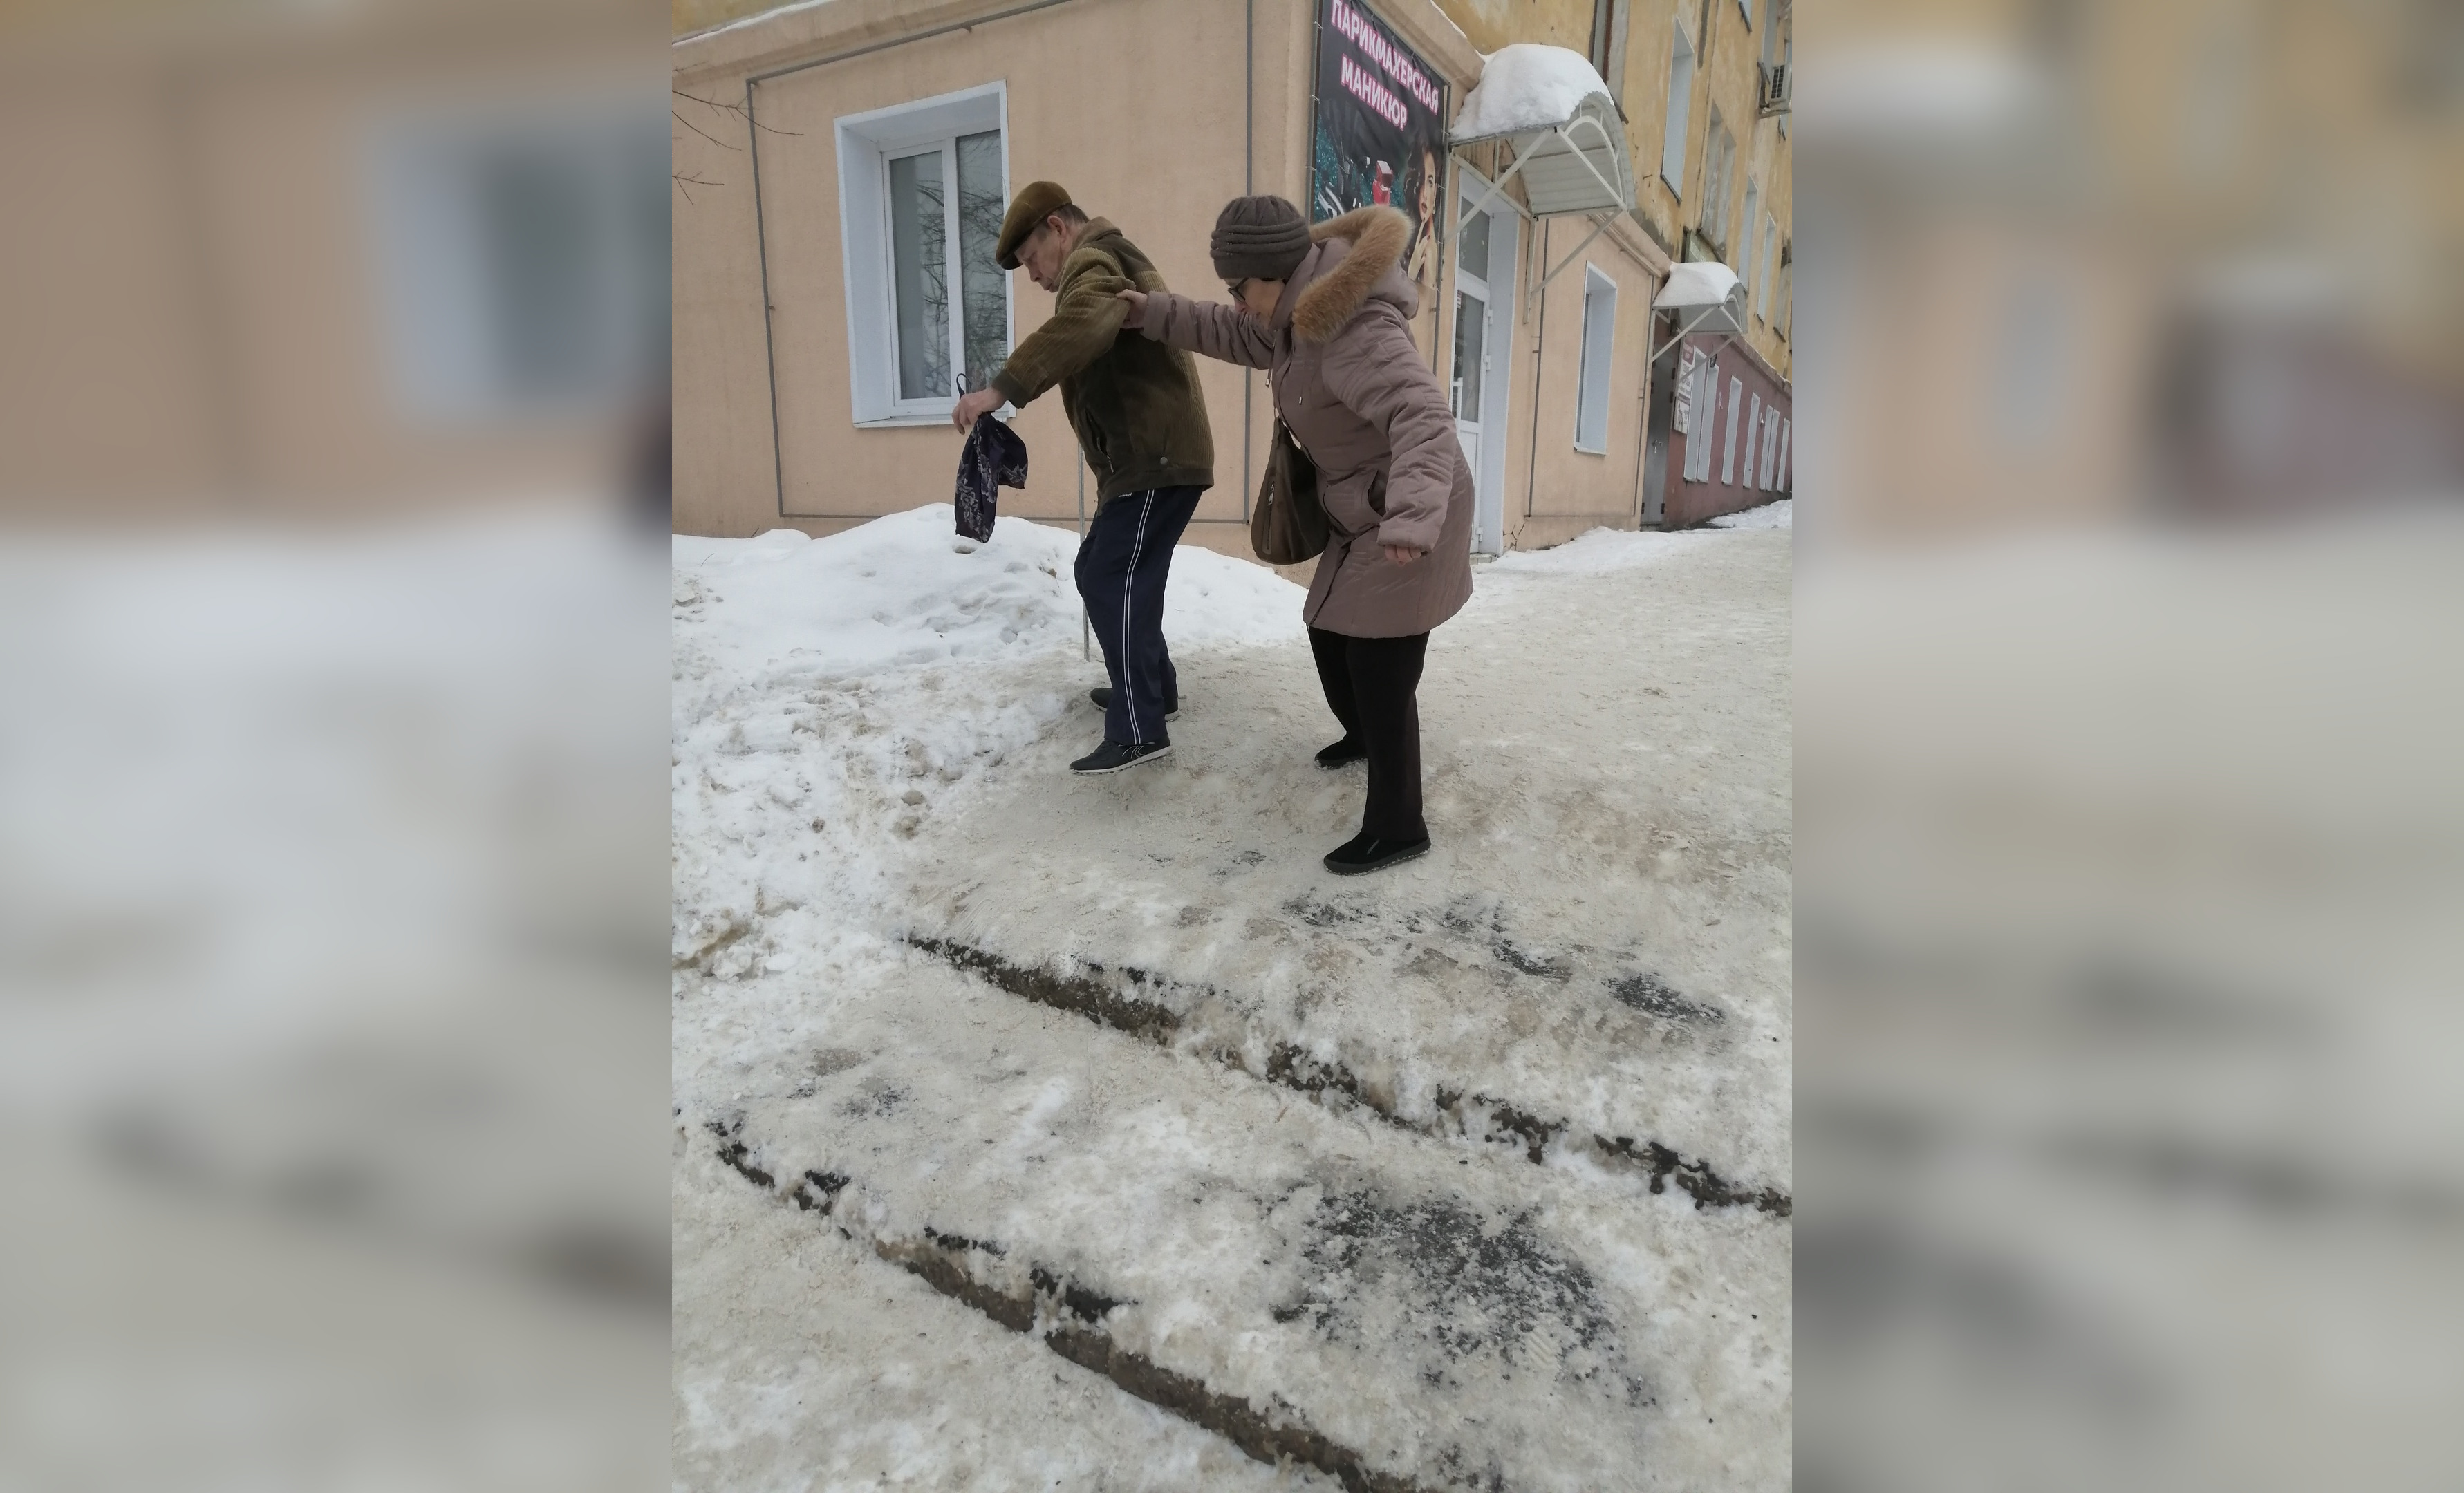 "На главных улицах не чищены тротуары": чепчане жалуются на уборку улиц